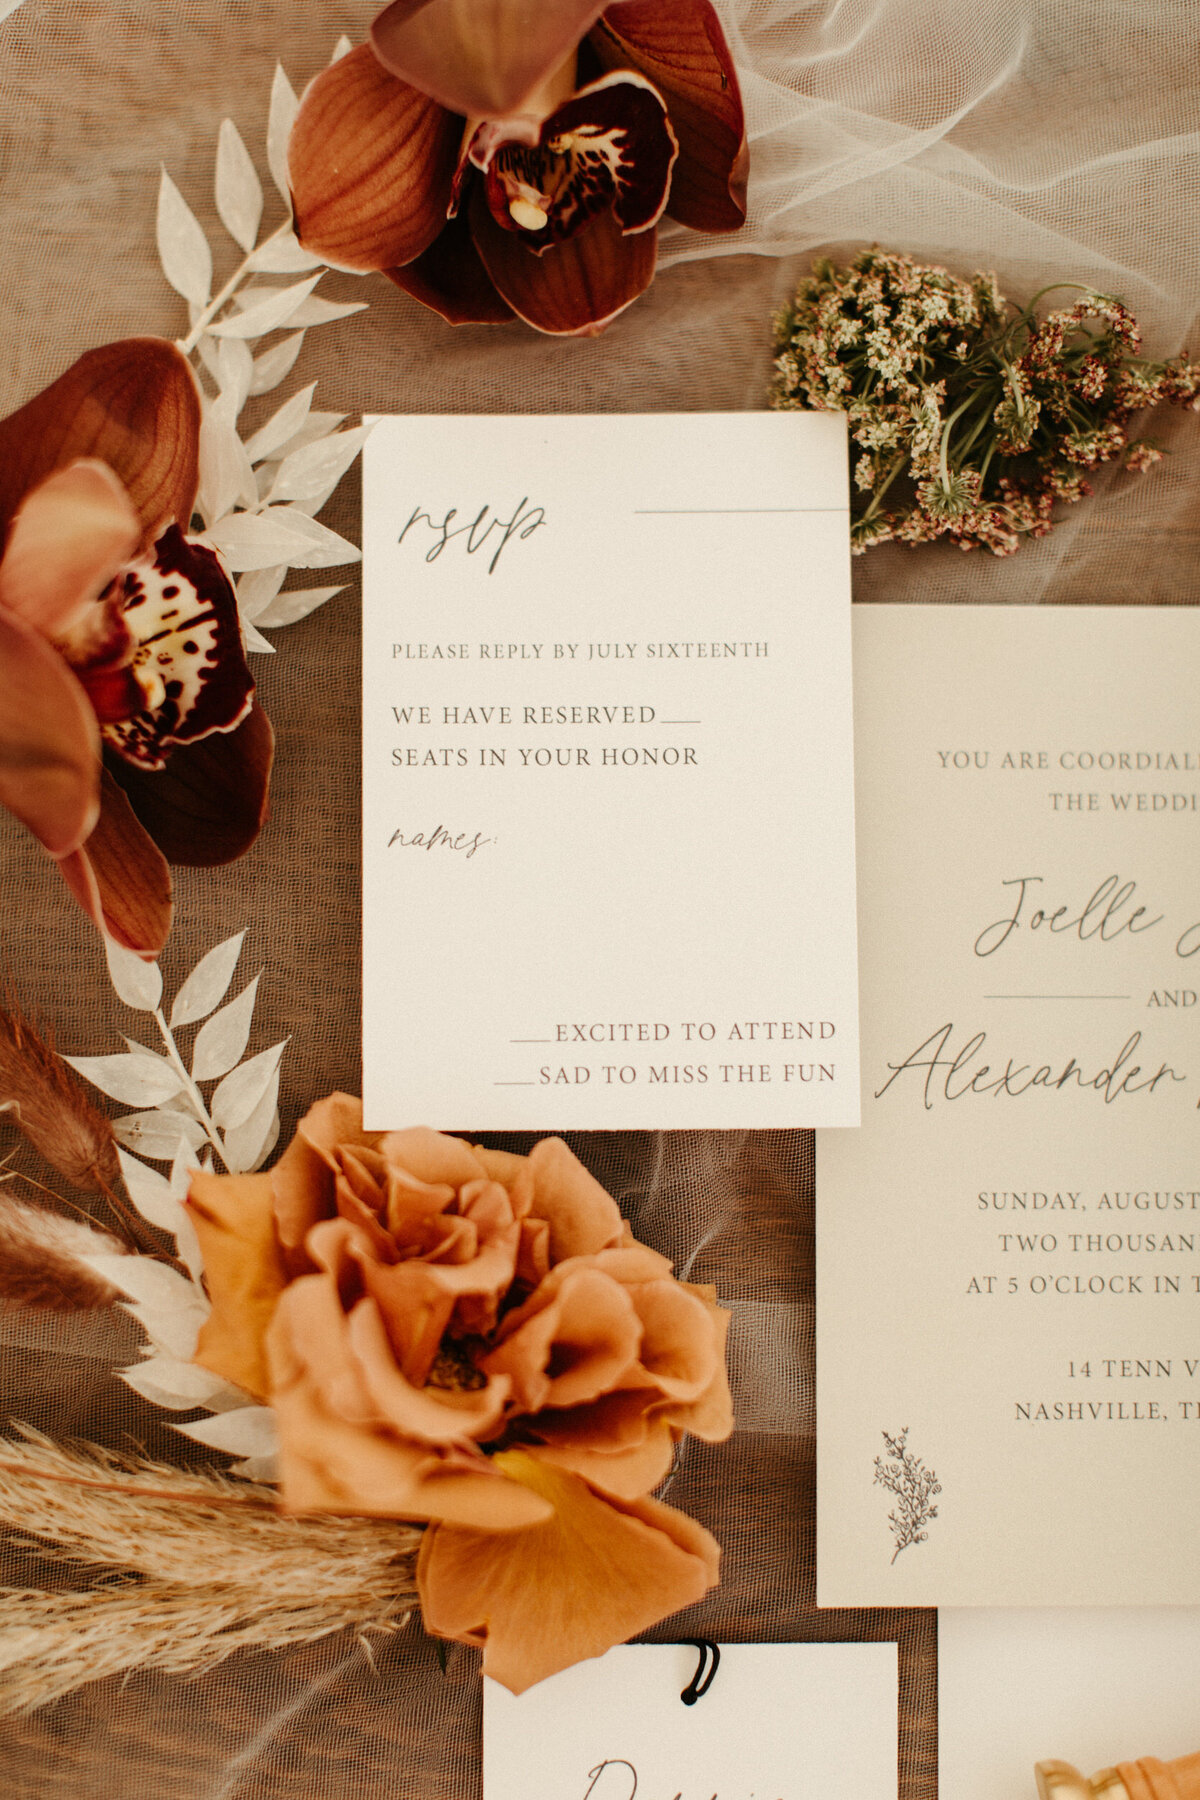 nashville-tennessee-tn-14tenn-wedding-venue-details-detail-shots-flat-lay-invitations